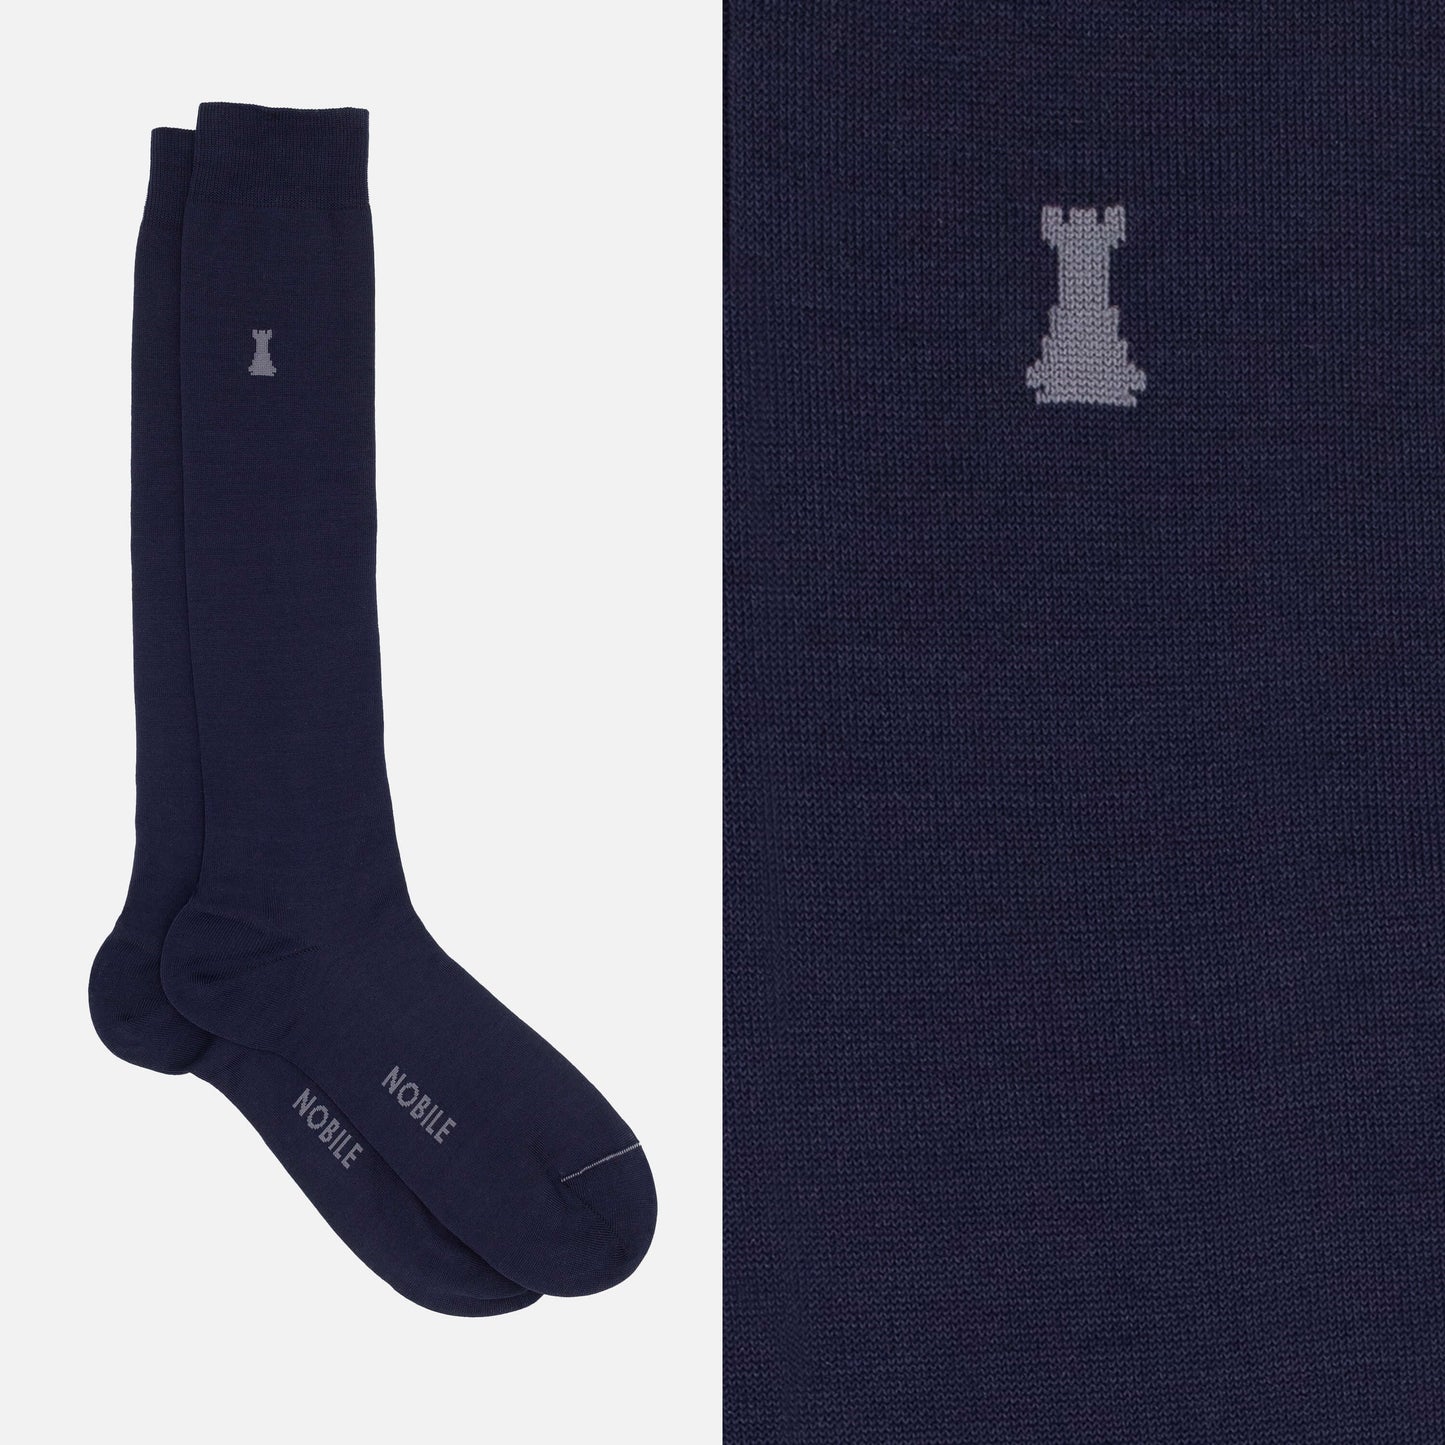 Basic mix Box of 6 knee high socks - 3 x Solid Black / 3 x Solid Blue